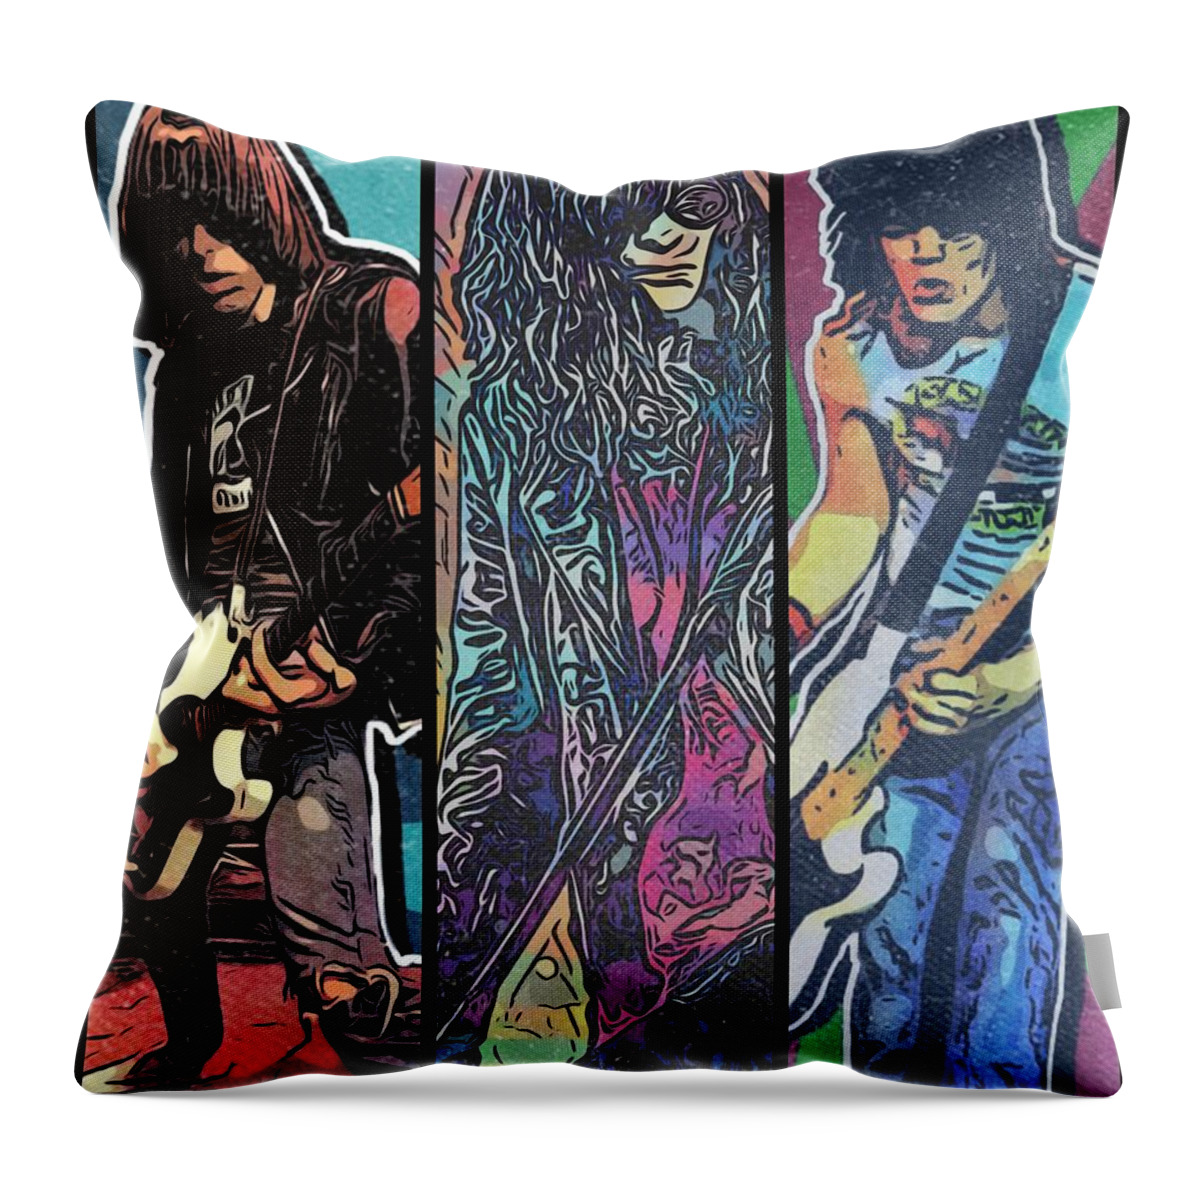 Ramones Throw Pillow featuring the digital art Ramones Pop Art Collage by Christina Rick